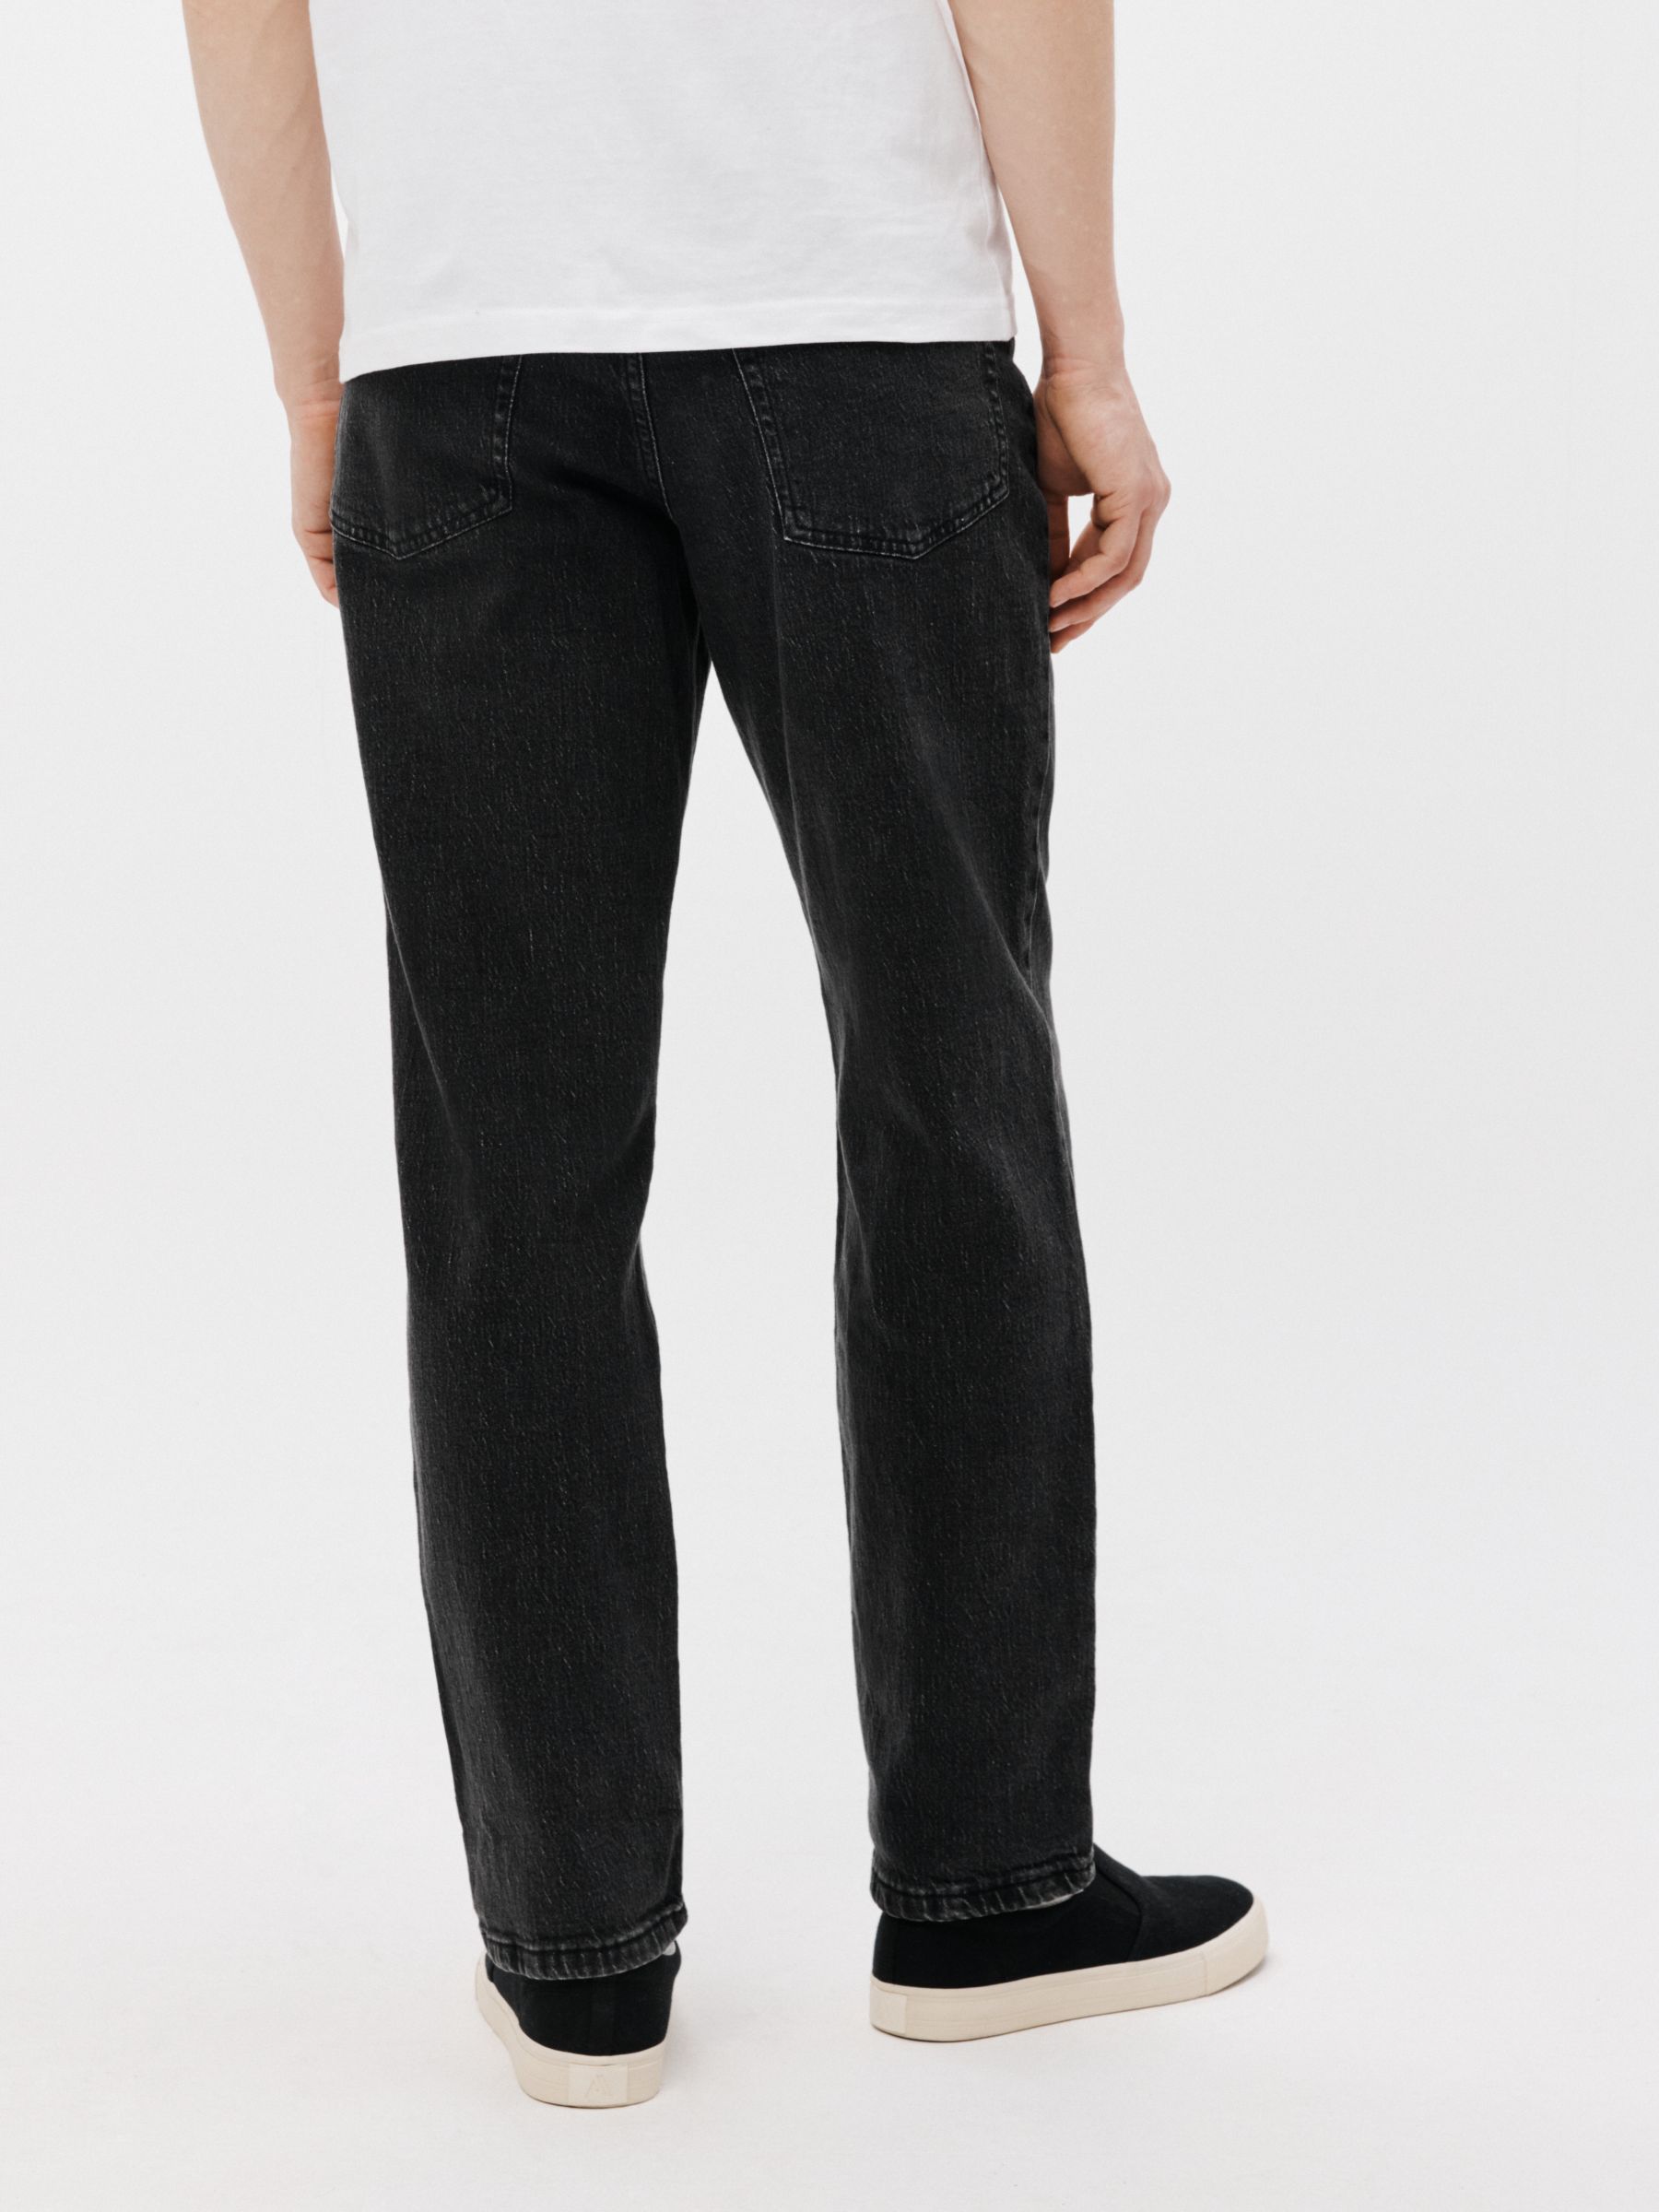 John Lewis ANYDAY Straight Fit Denim Jeans, Black at John Lewis & Partners